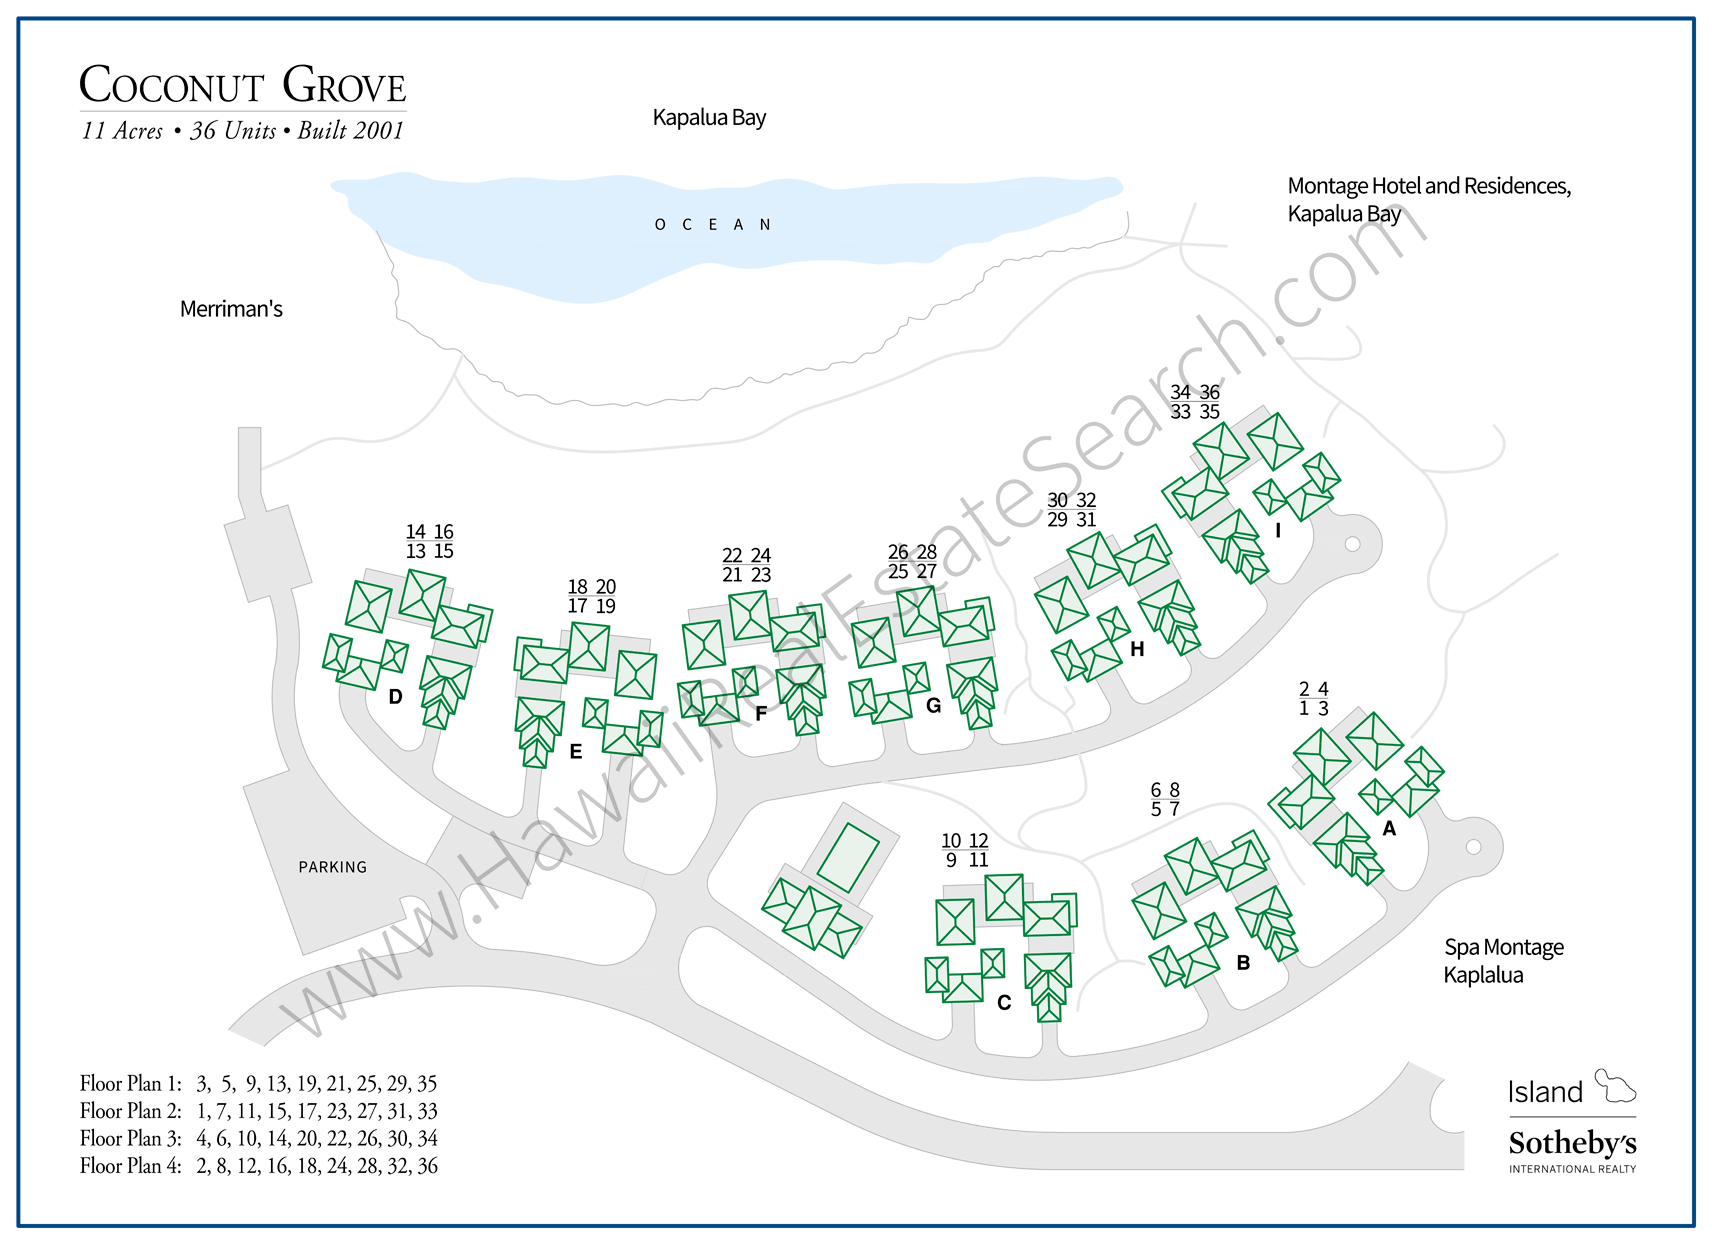 Kapalua Coconut Grove Property Map